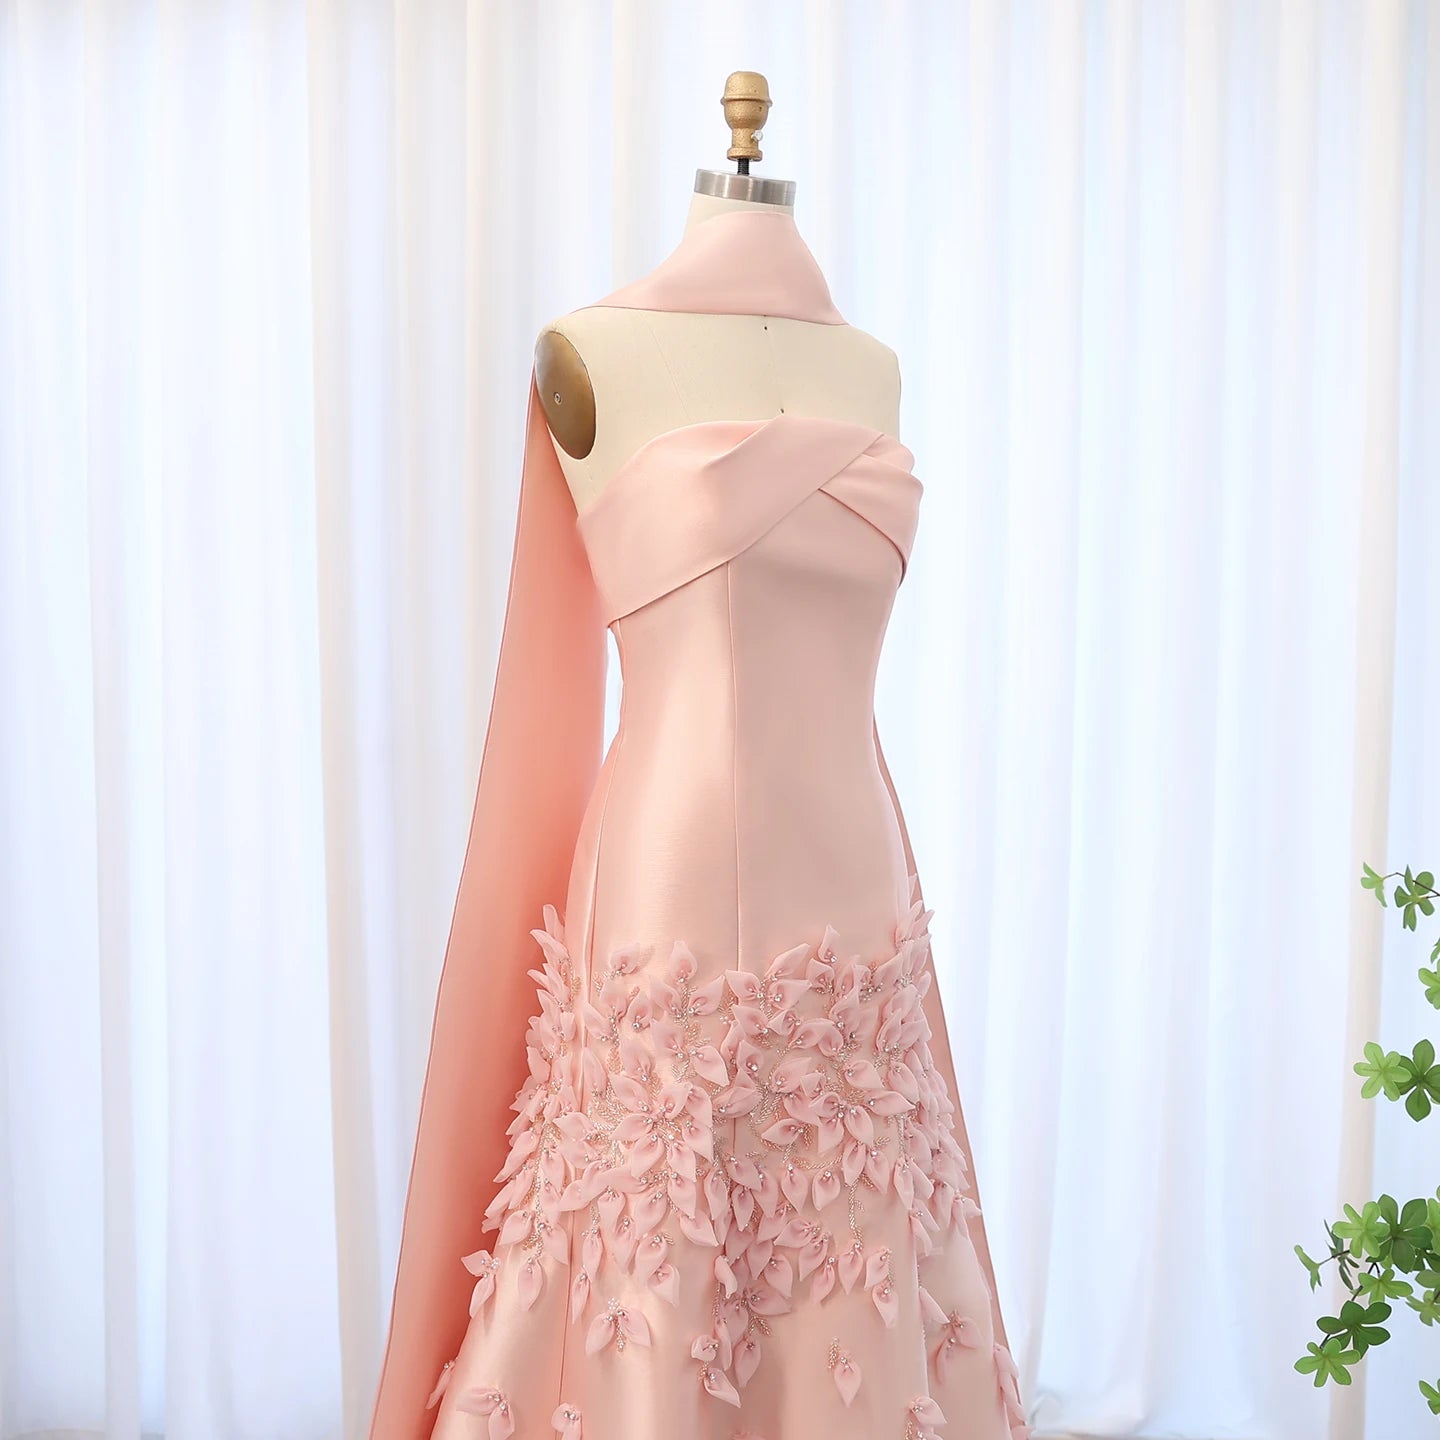 UU-Sharon Said Luxury 3D Leaves Blush Pink Satin Mermaid Evening Dress with Cape Dubai Arabic Women Wedding Prom Party Gowns